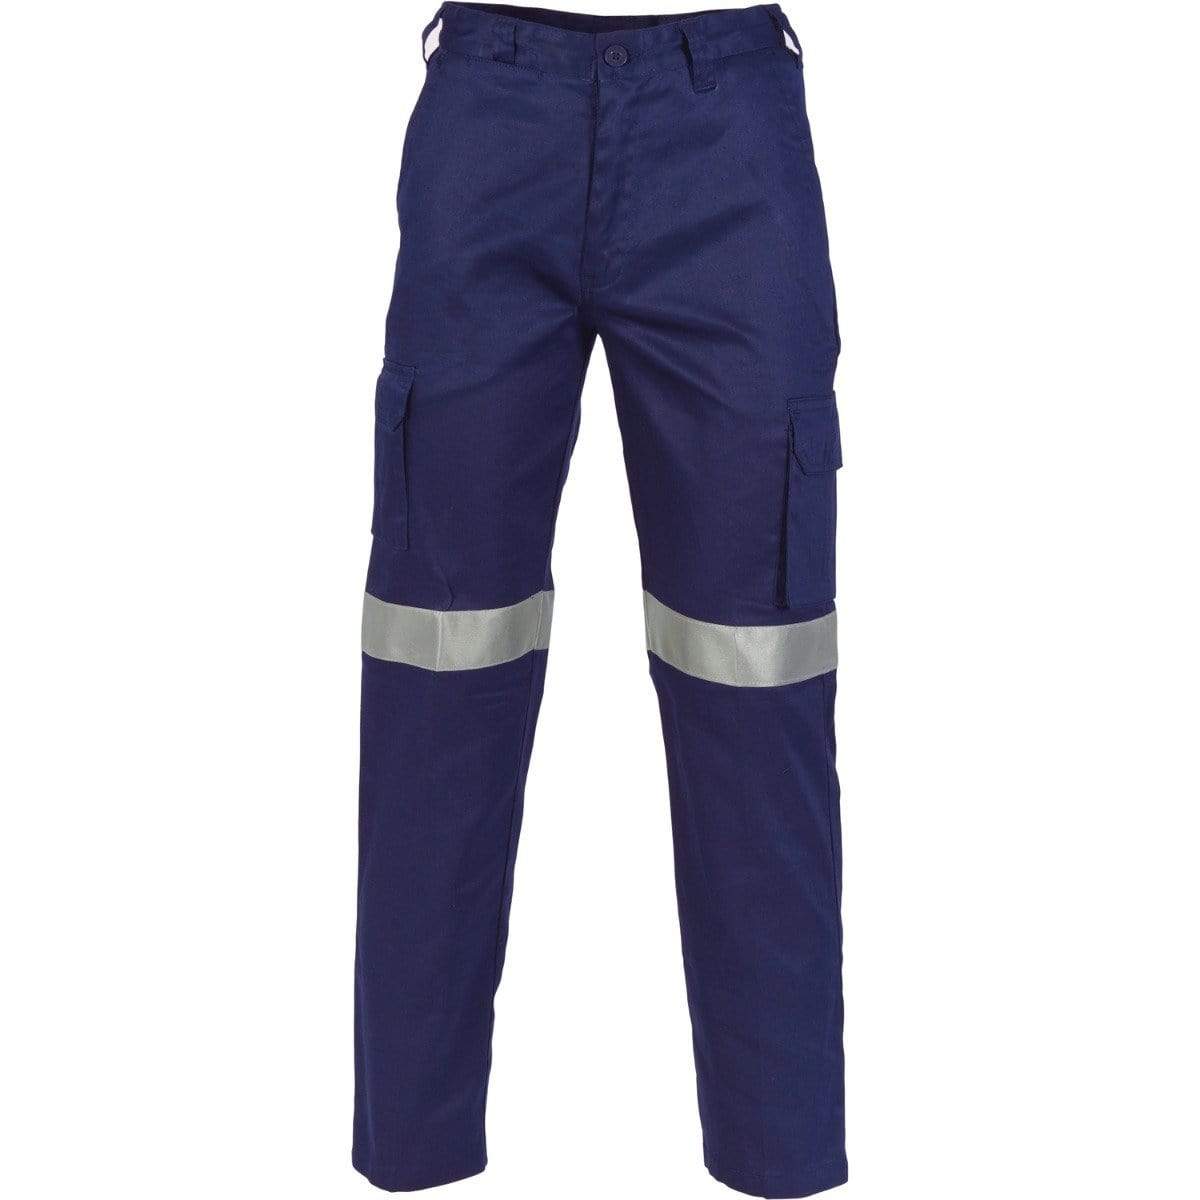 Dnc Workwear Lightweight Cotton Cargo Pants With 3m R/tape - 3326 Work Wear DNC Workwear Navy 72R 